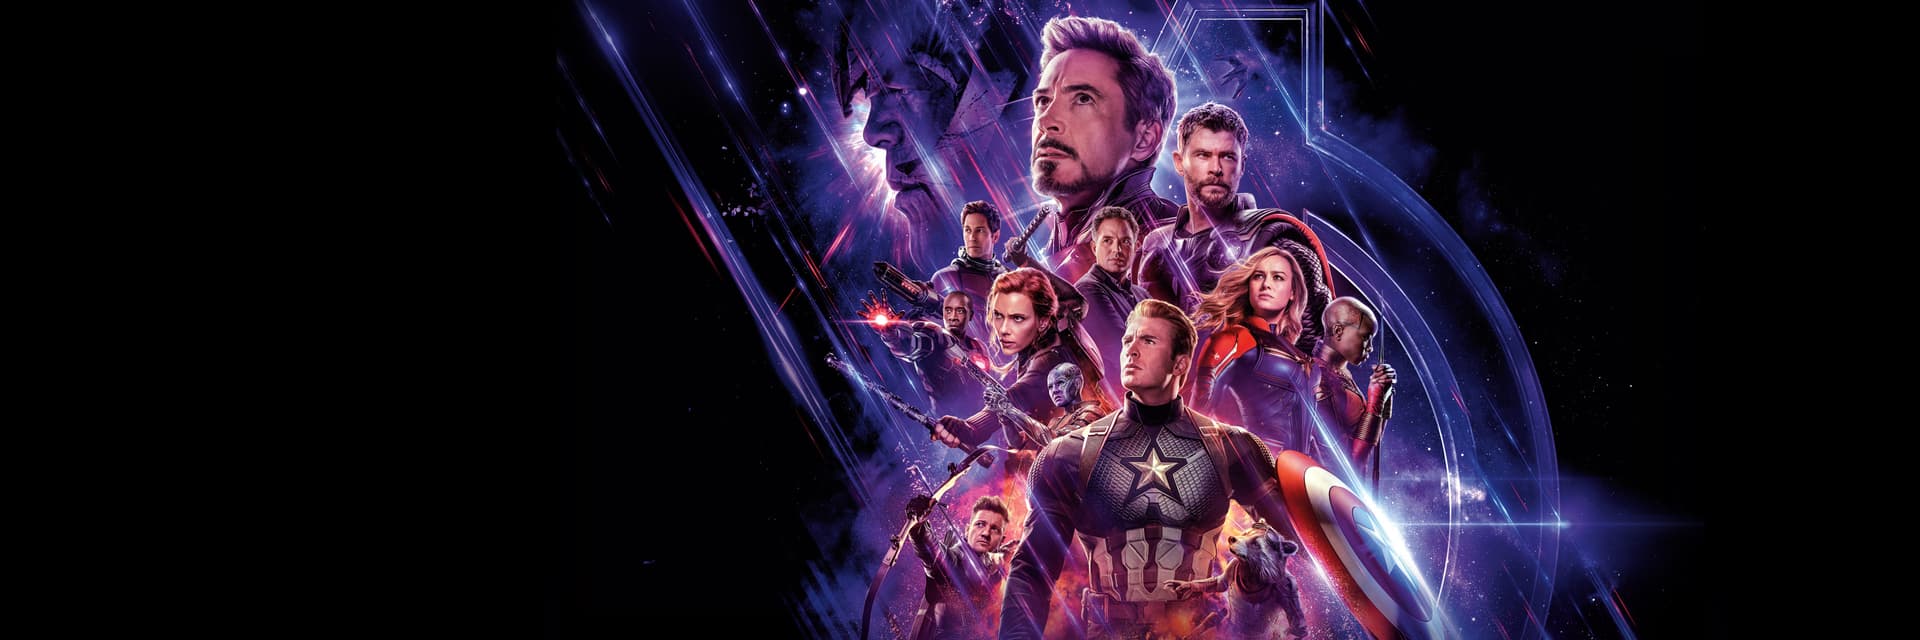 Avengers: Endgame Movie Poster Canada Home Entertainment